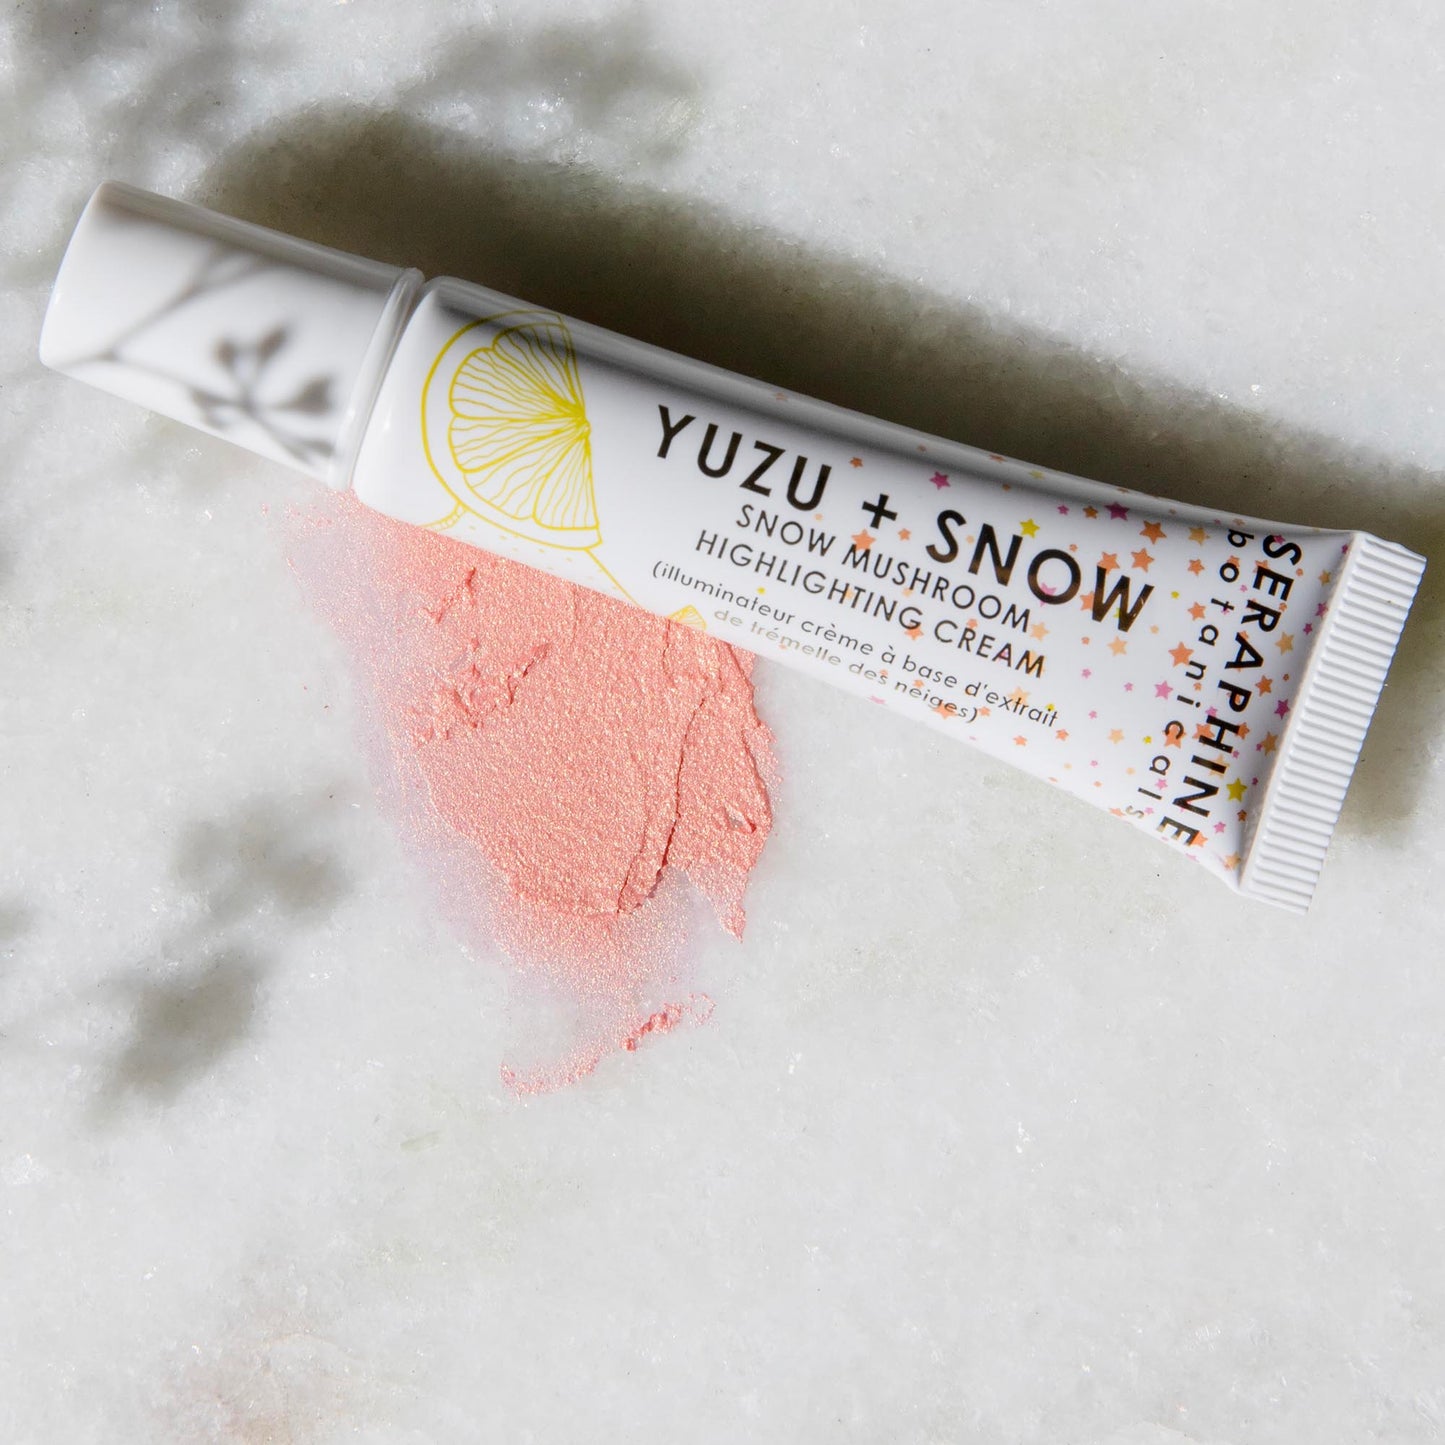 Yuzu + Snow - Snow Mushroom Highlighting Cream